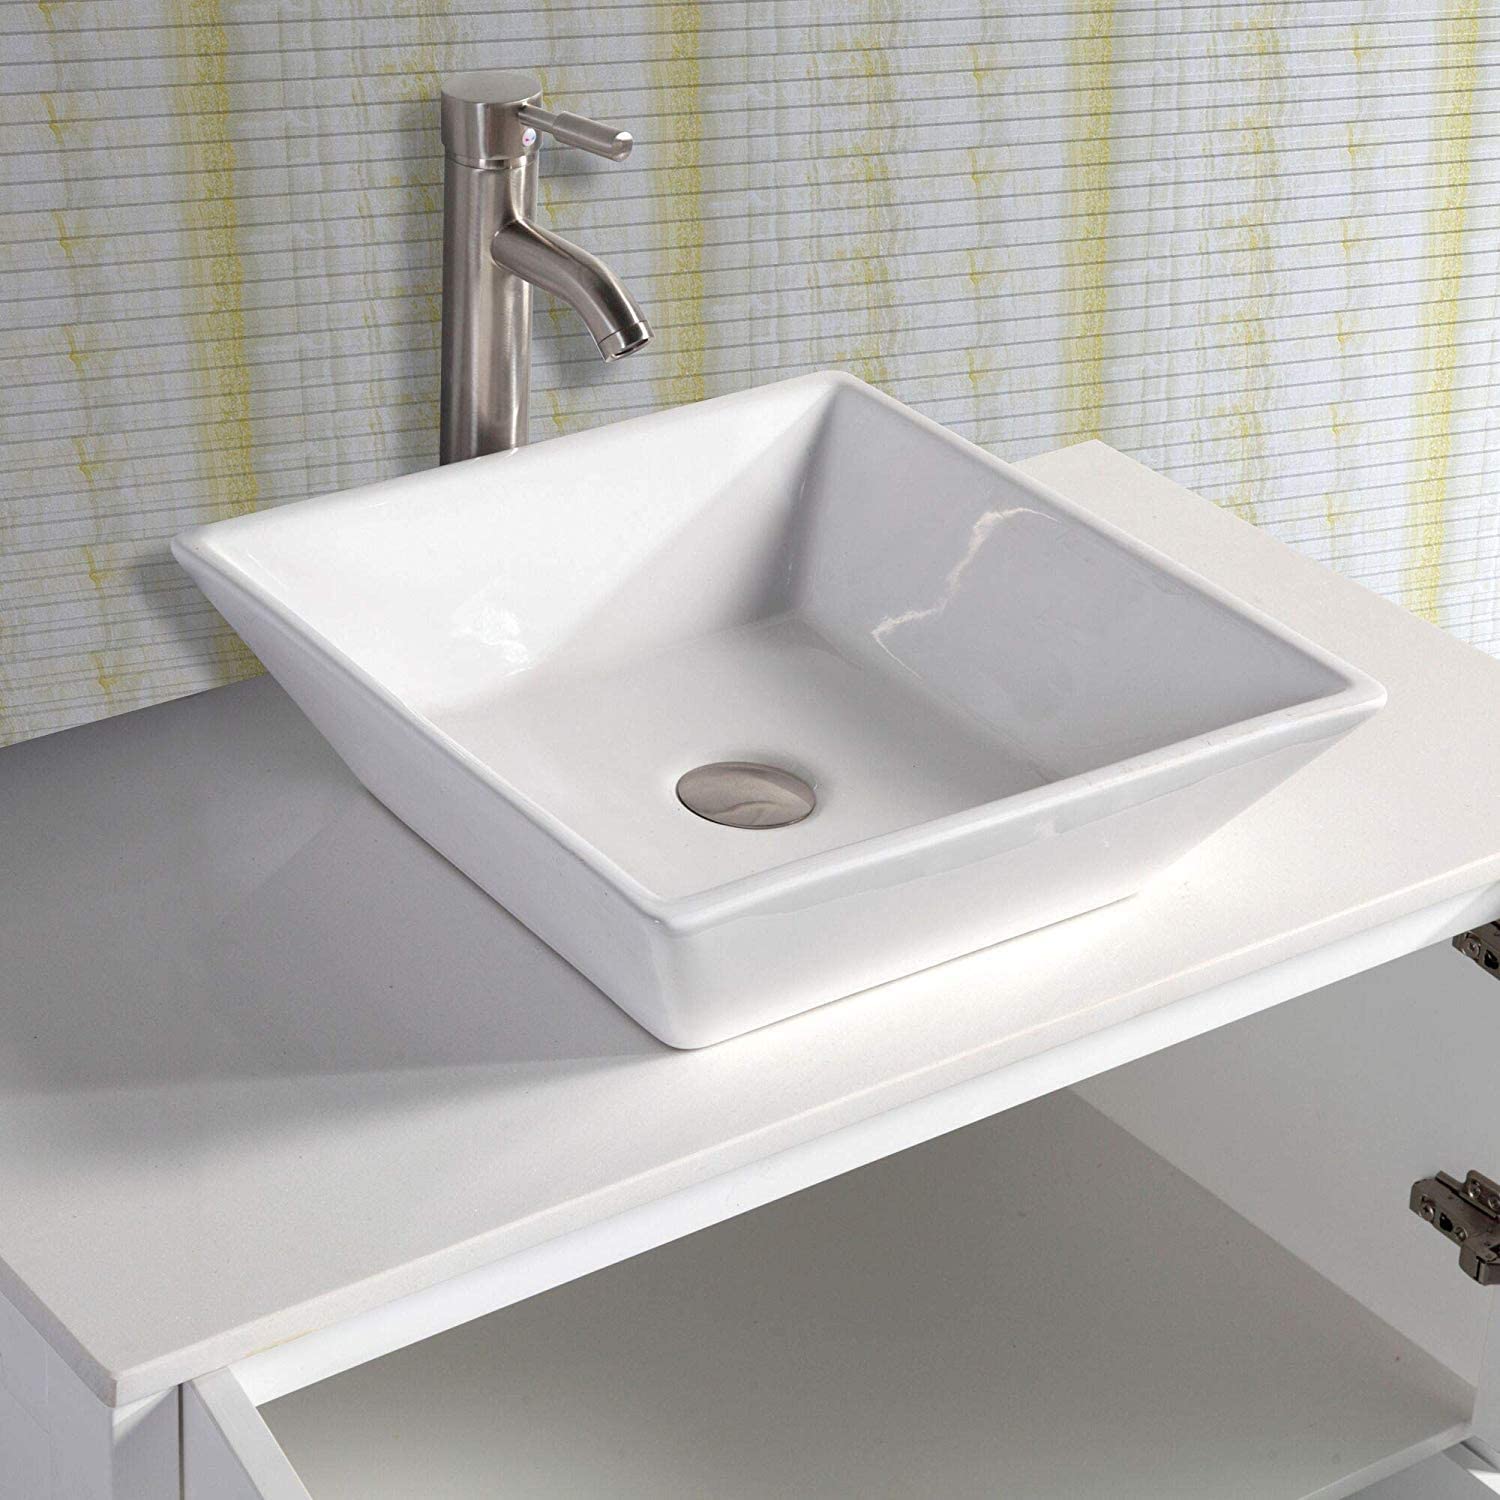 30 in. Single Sink Small Bathroom Vanity Set in White